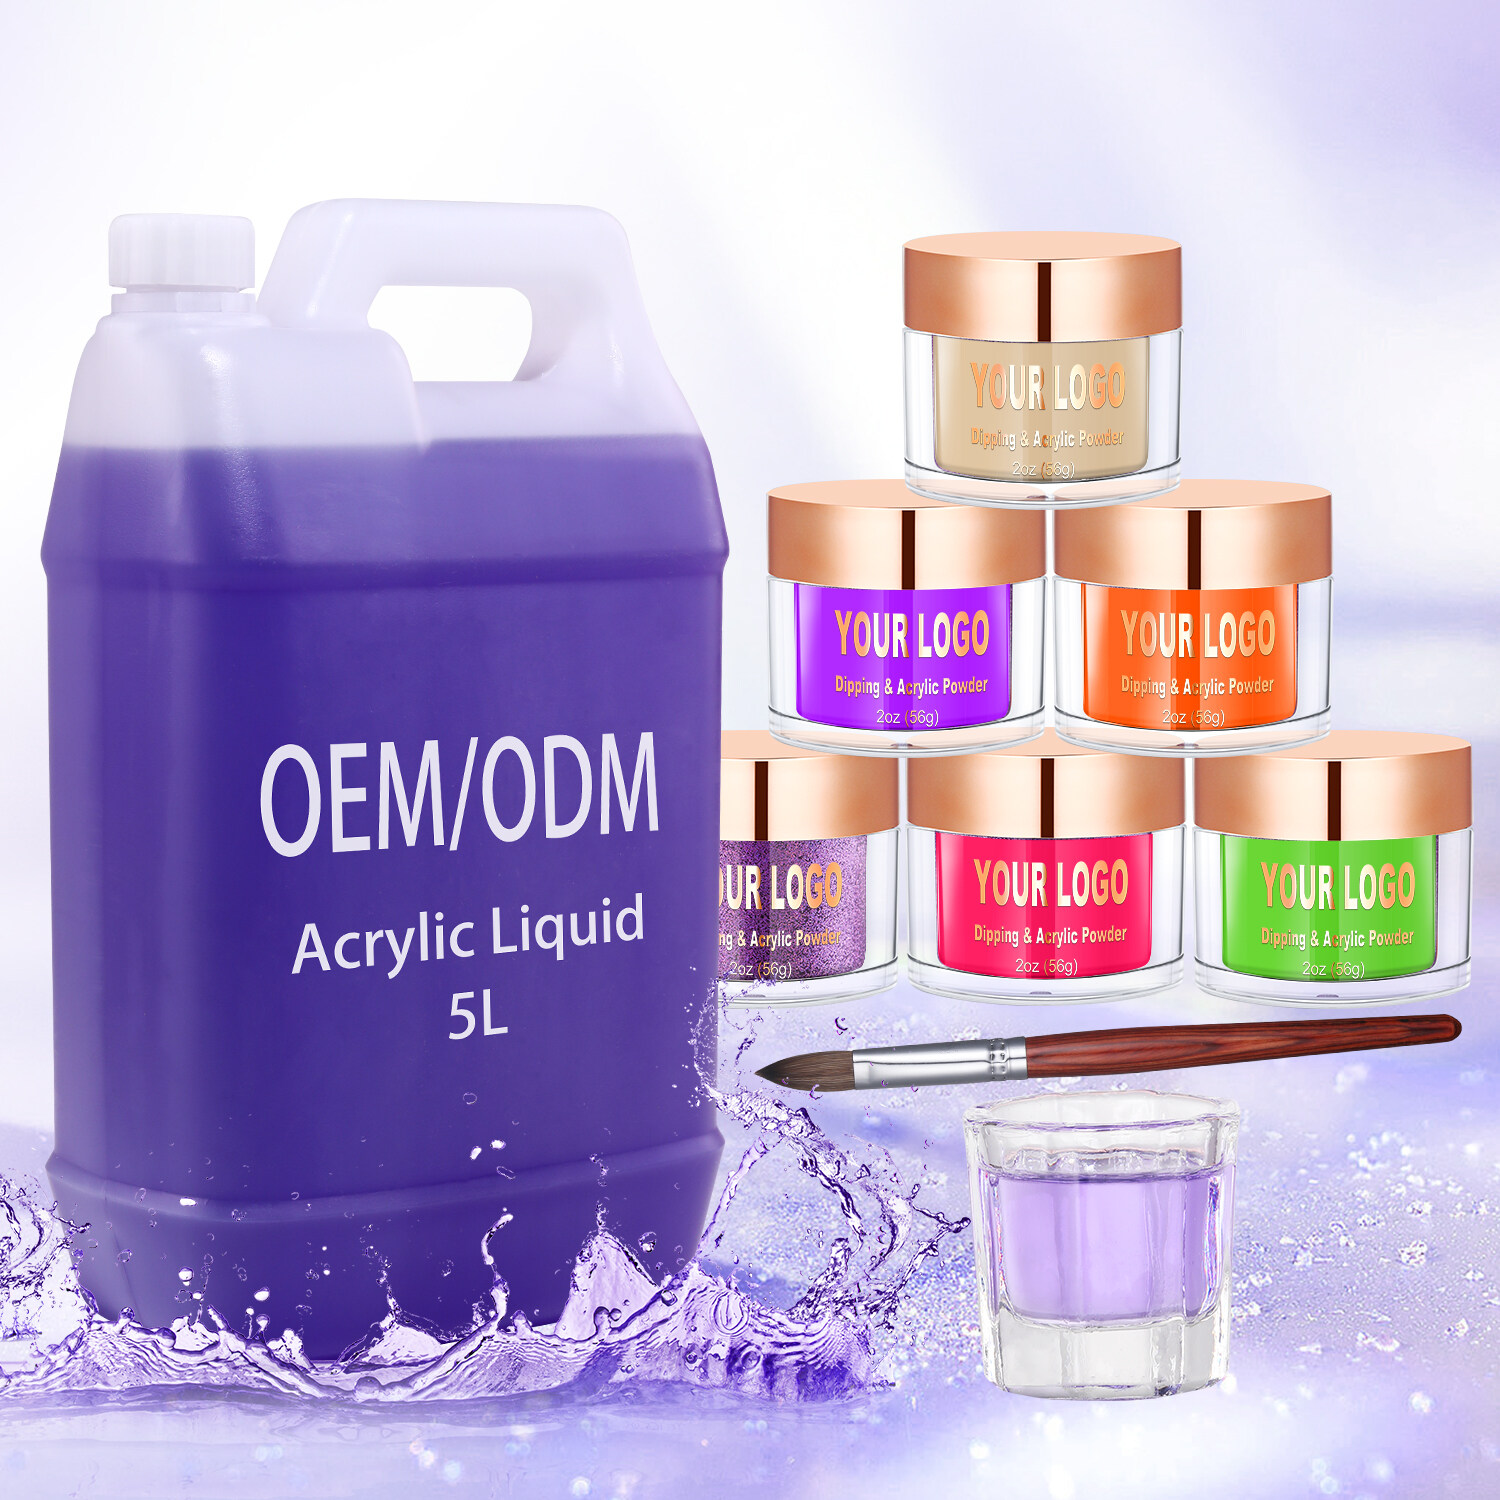 acrylic liquid monomer oem, acrylic liquid monomer odm, acrylic liquid monomer customize, scented acrylic monomer liquid, acrylic powder and monomer liquid